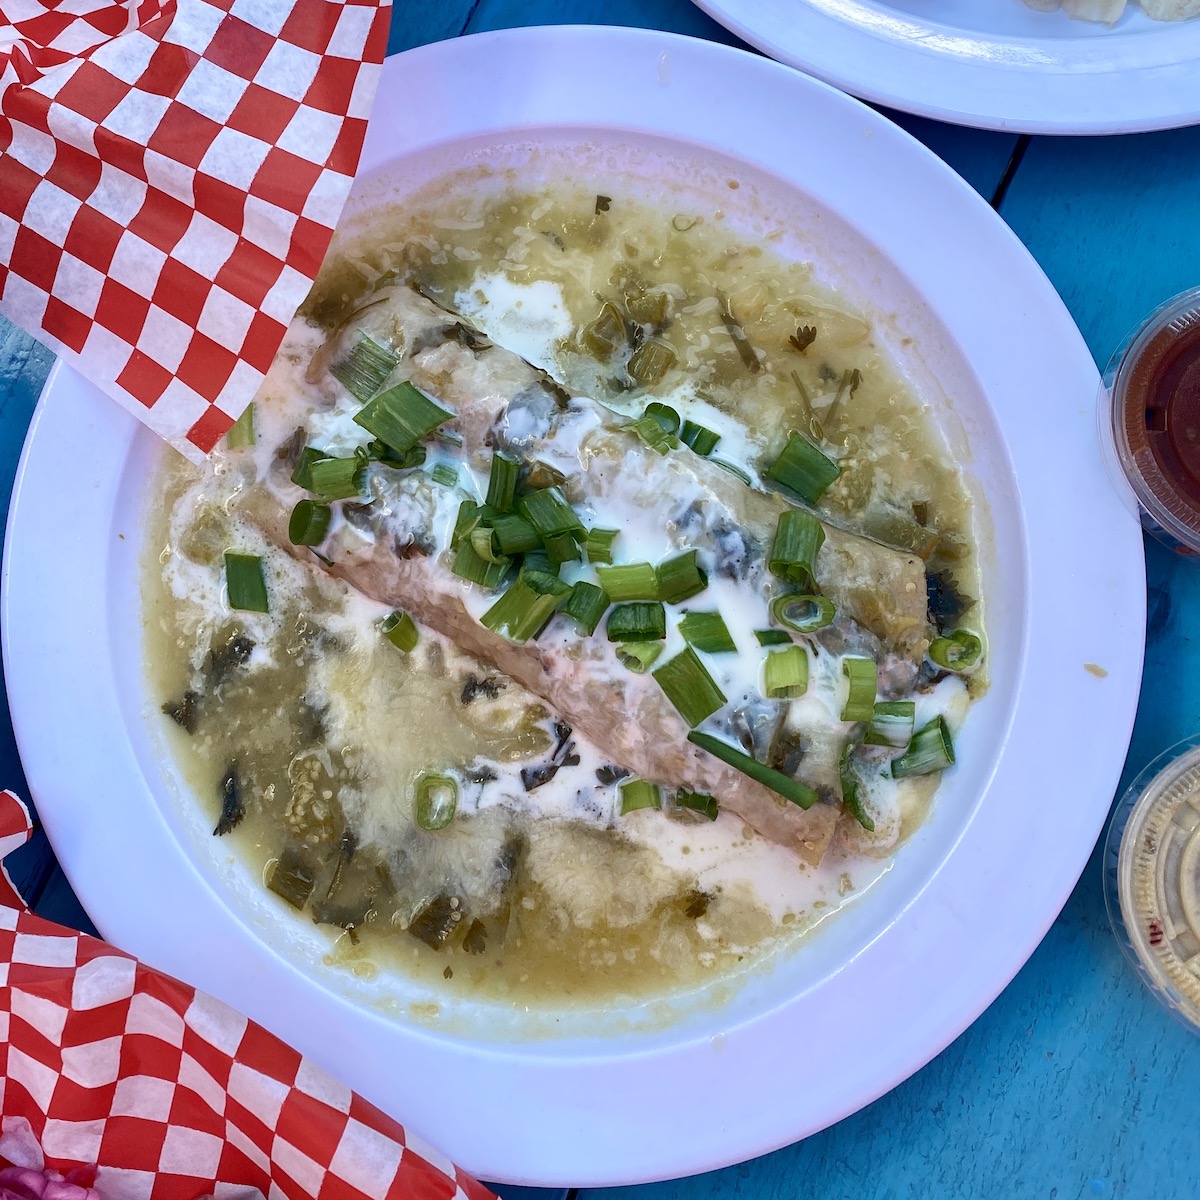 Salad and Go, Mana Mobile: San Antonio's biggest food stories of